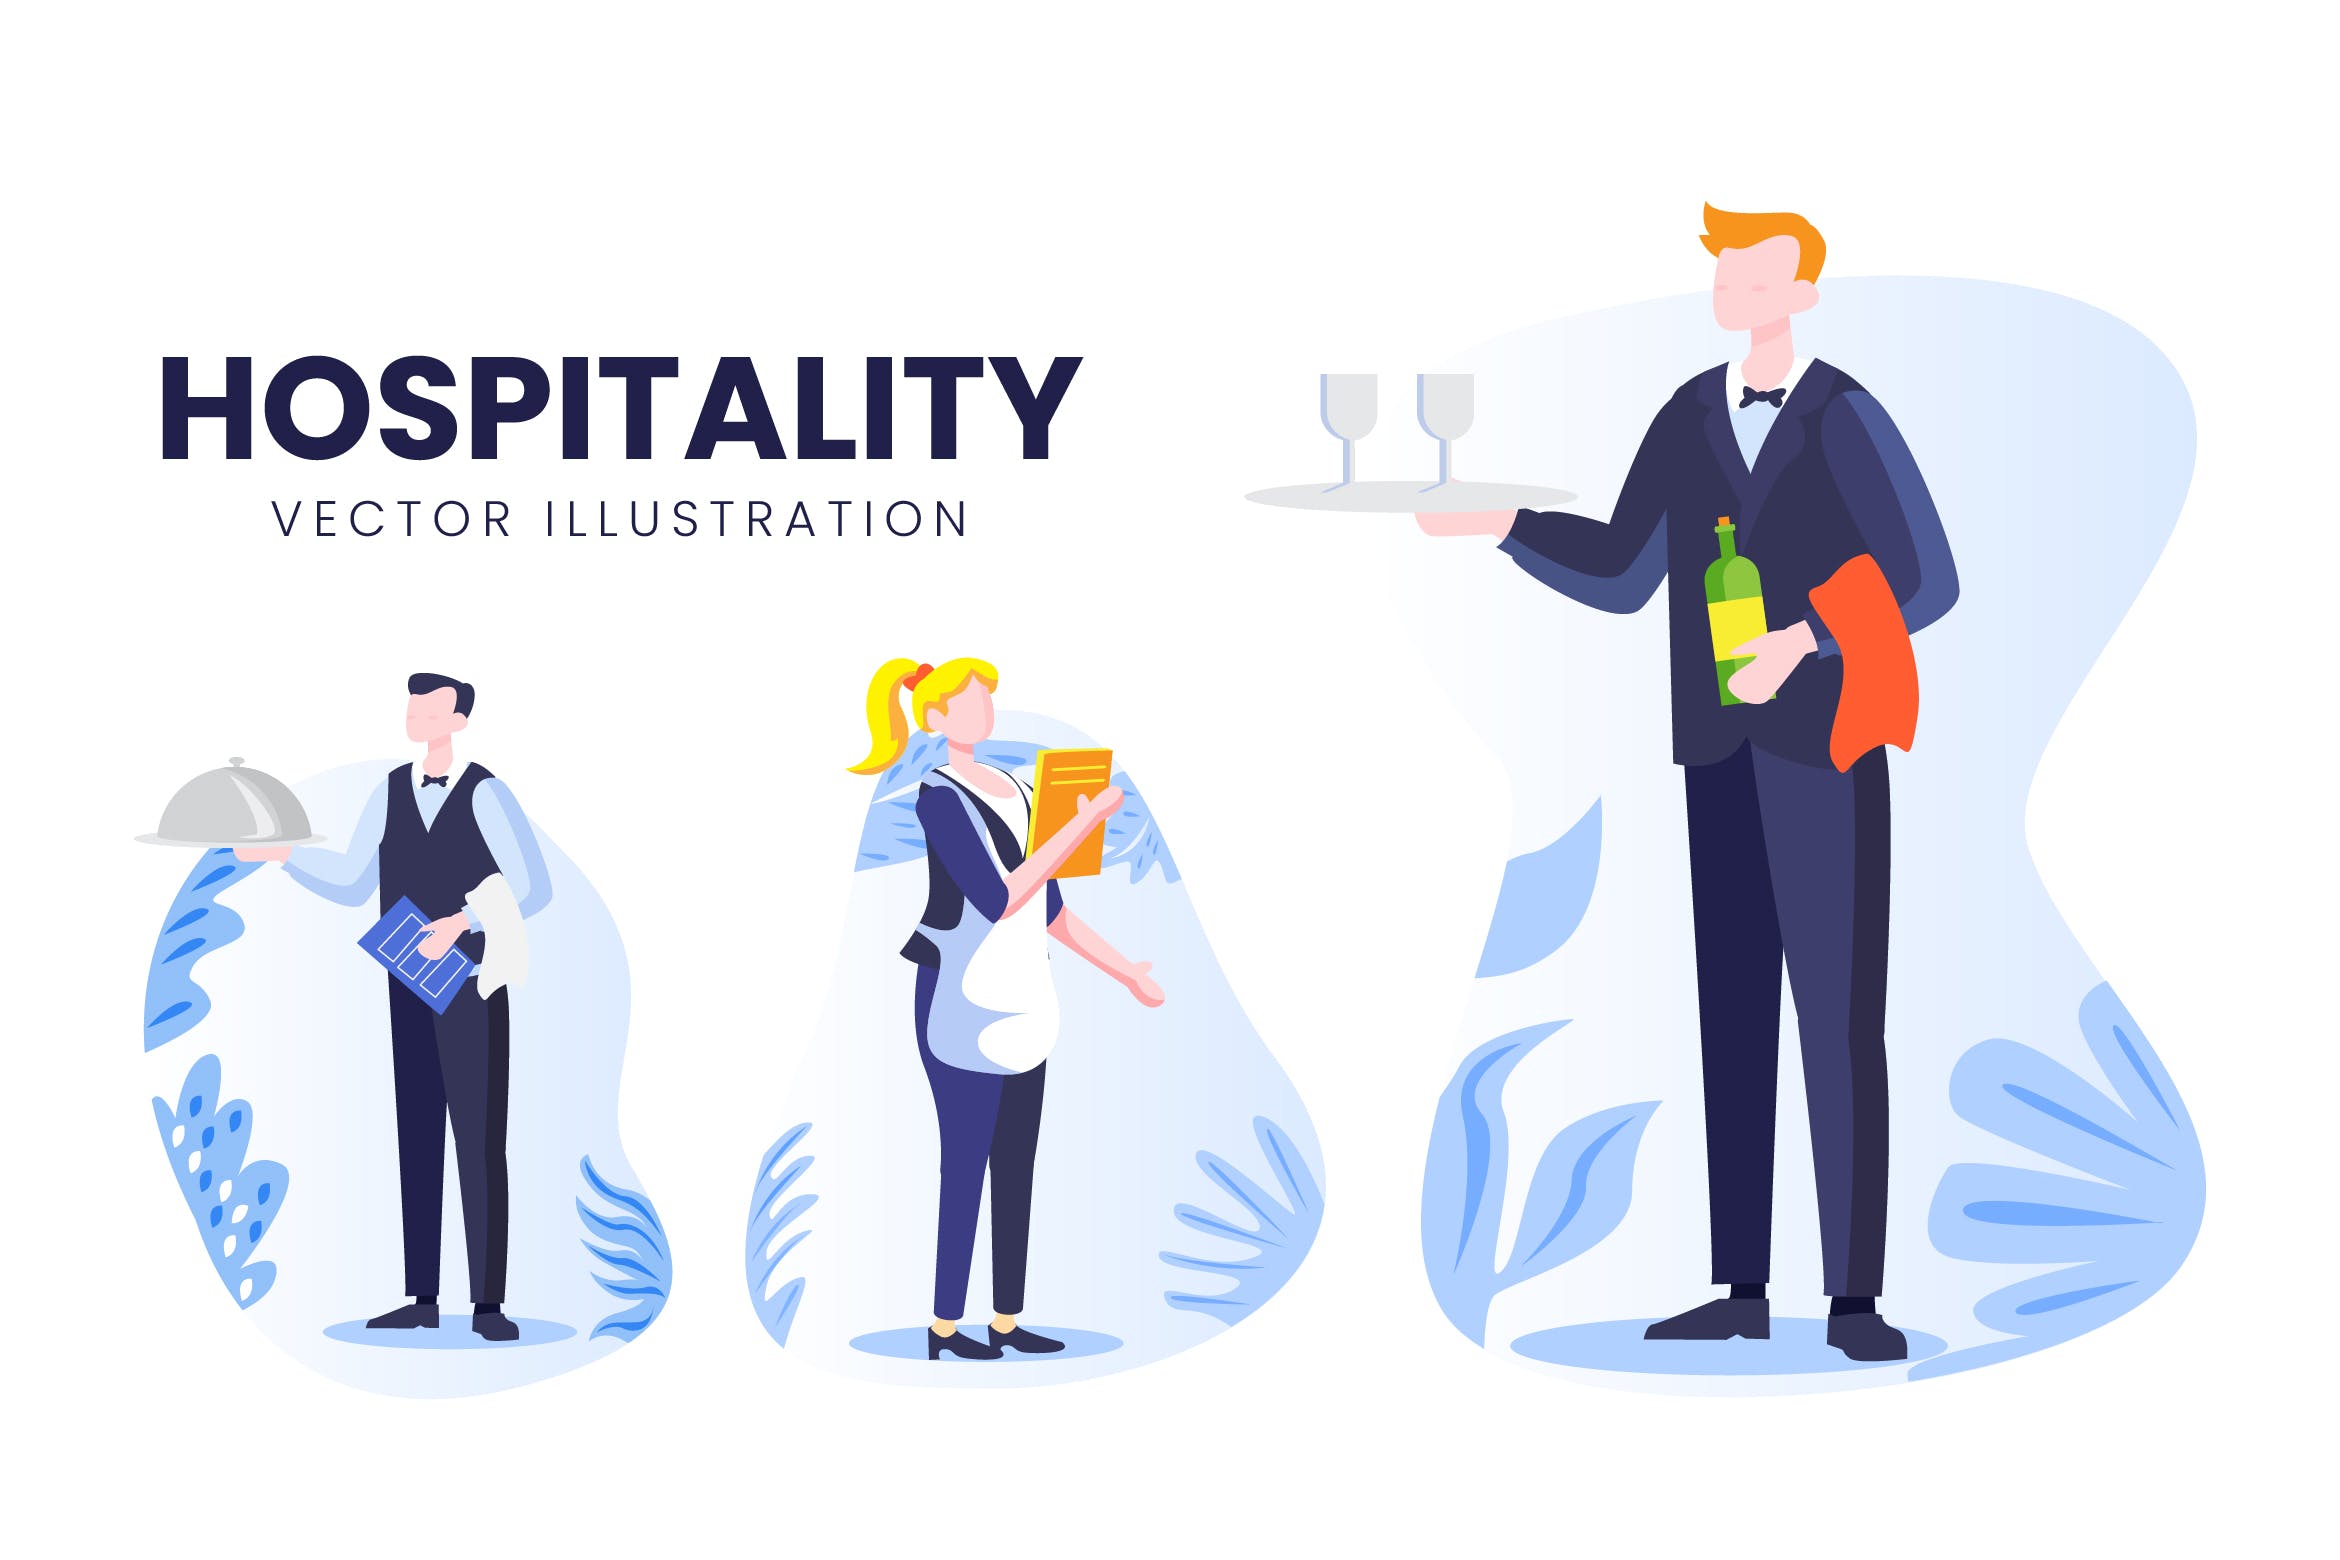 酒店职员人物形象素材库精选手绘插画矢量素材 Hospitality Occupation Vector Character Set插图